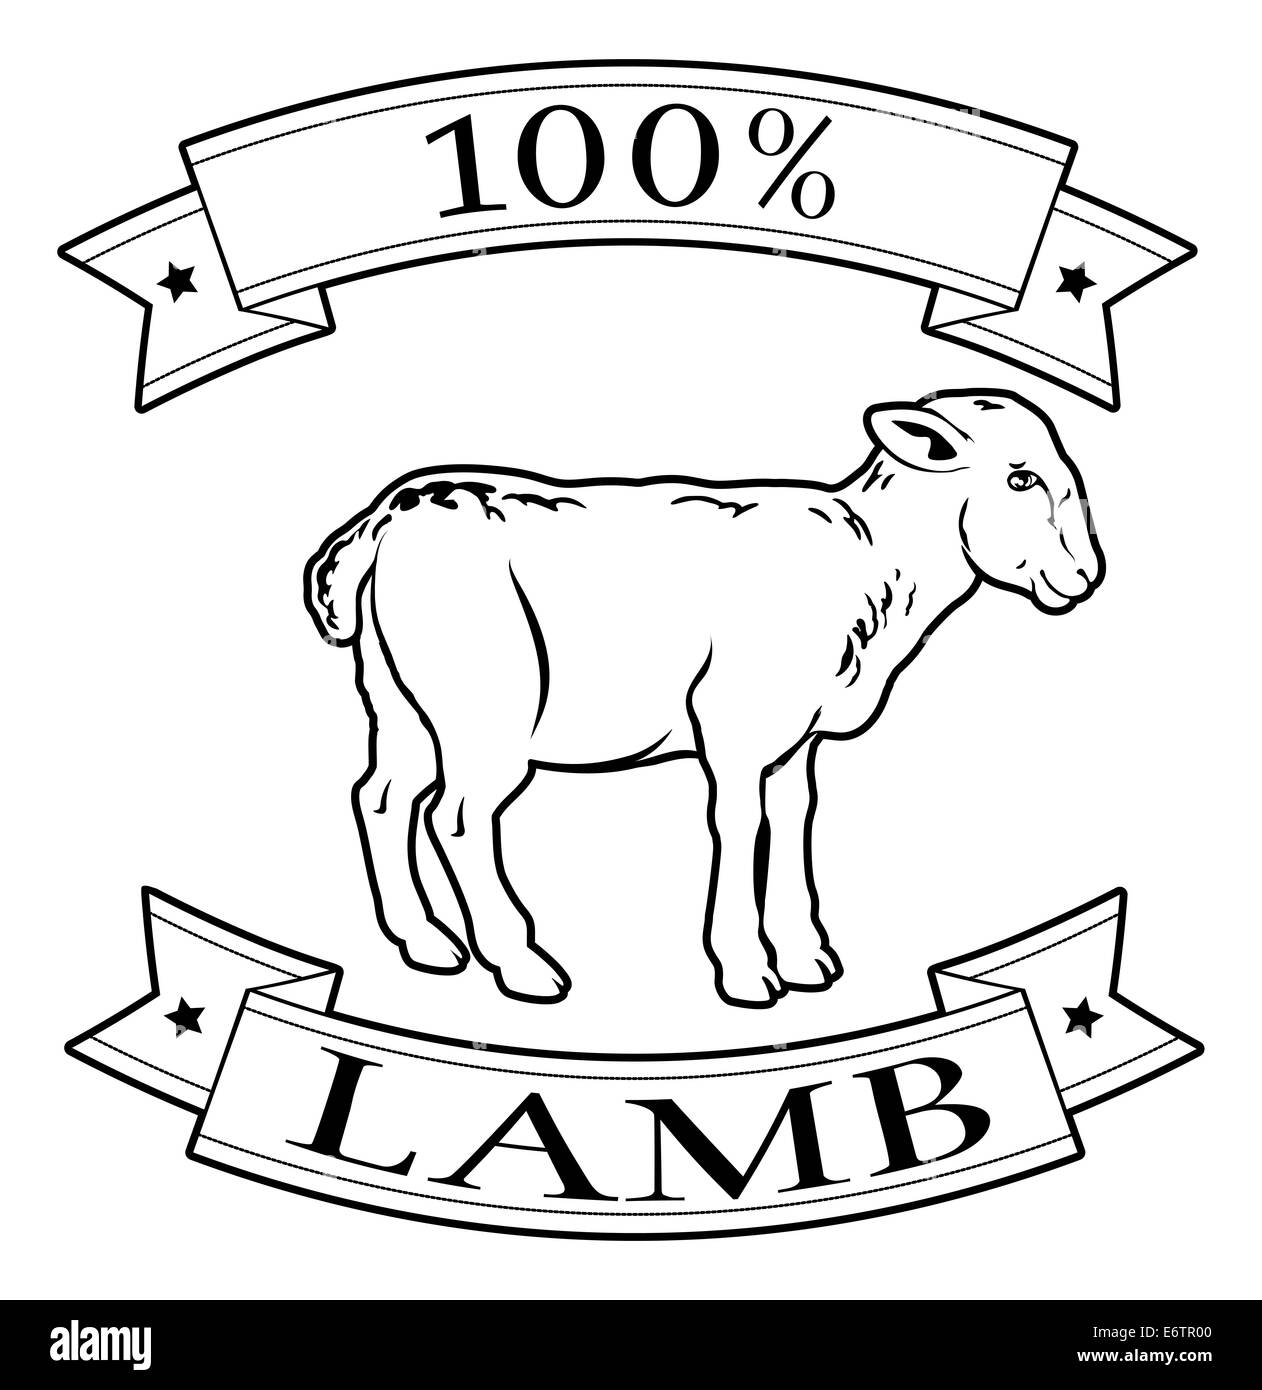 Lamb 100 percent label with lamb or sheep and reading 100 percent lamb Stock Photo